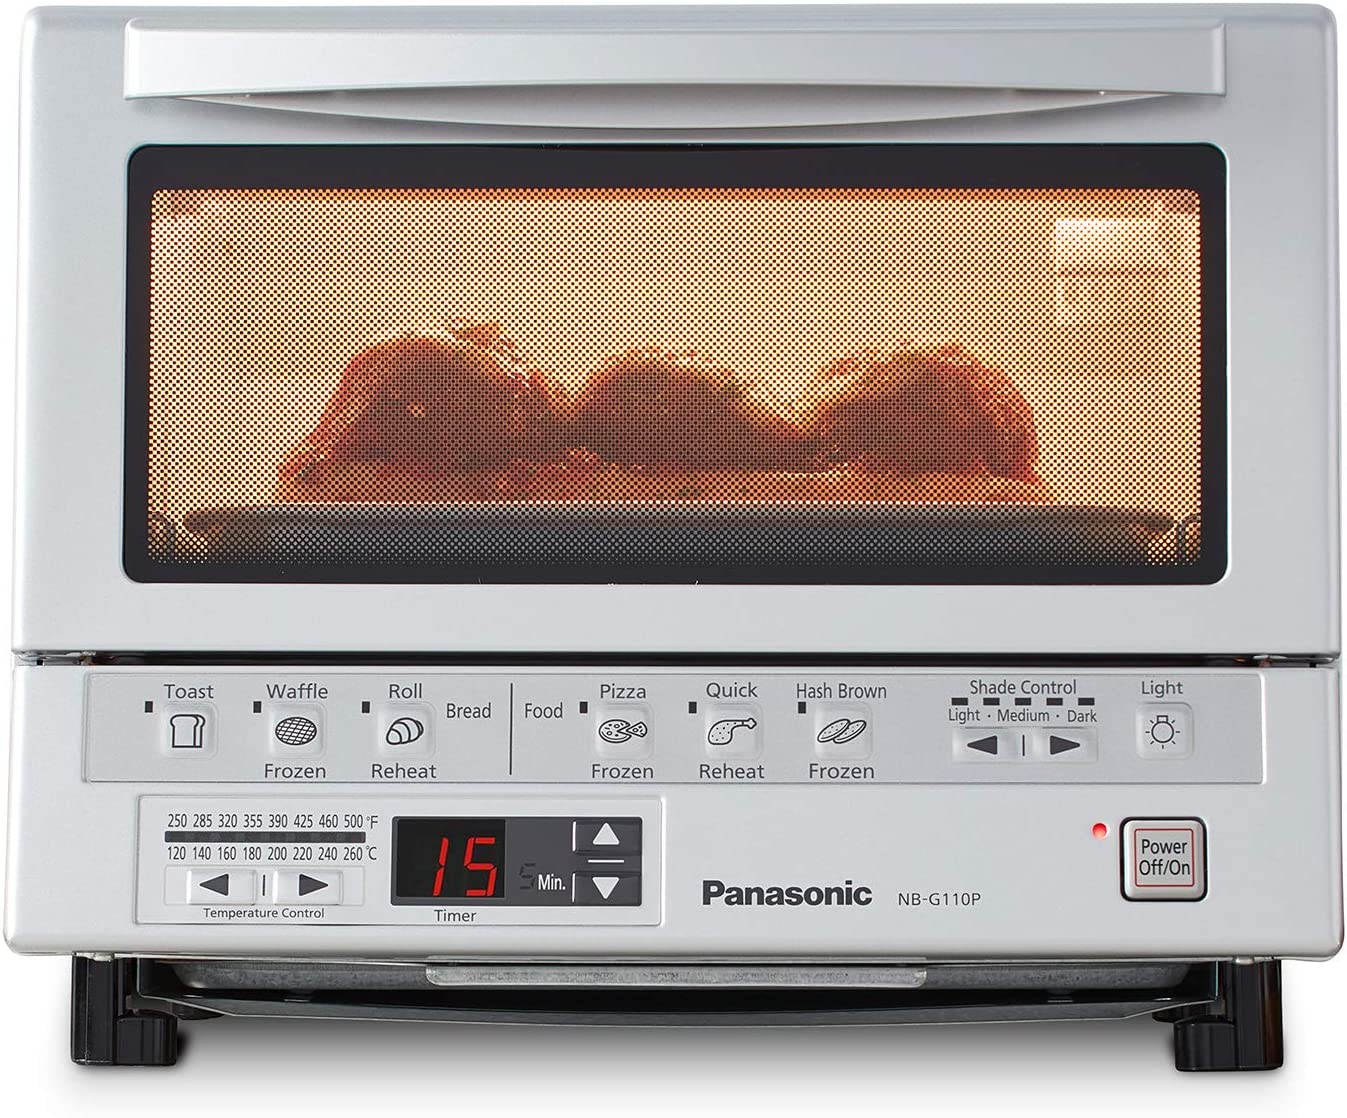 Panasonic NB-G110P 1300-Watt FlashXpress Compact Double Infrared Toaster Oven